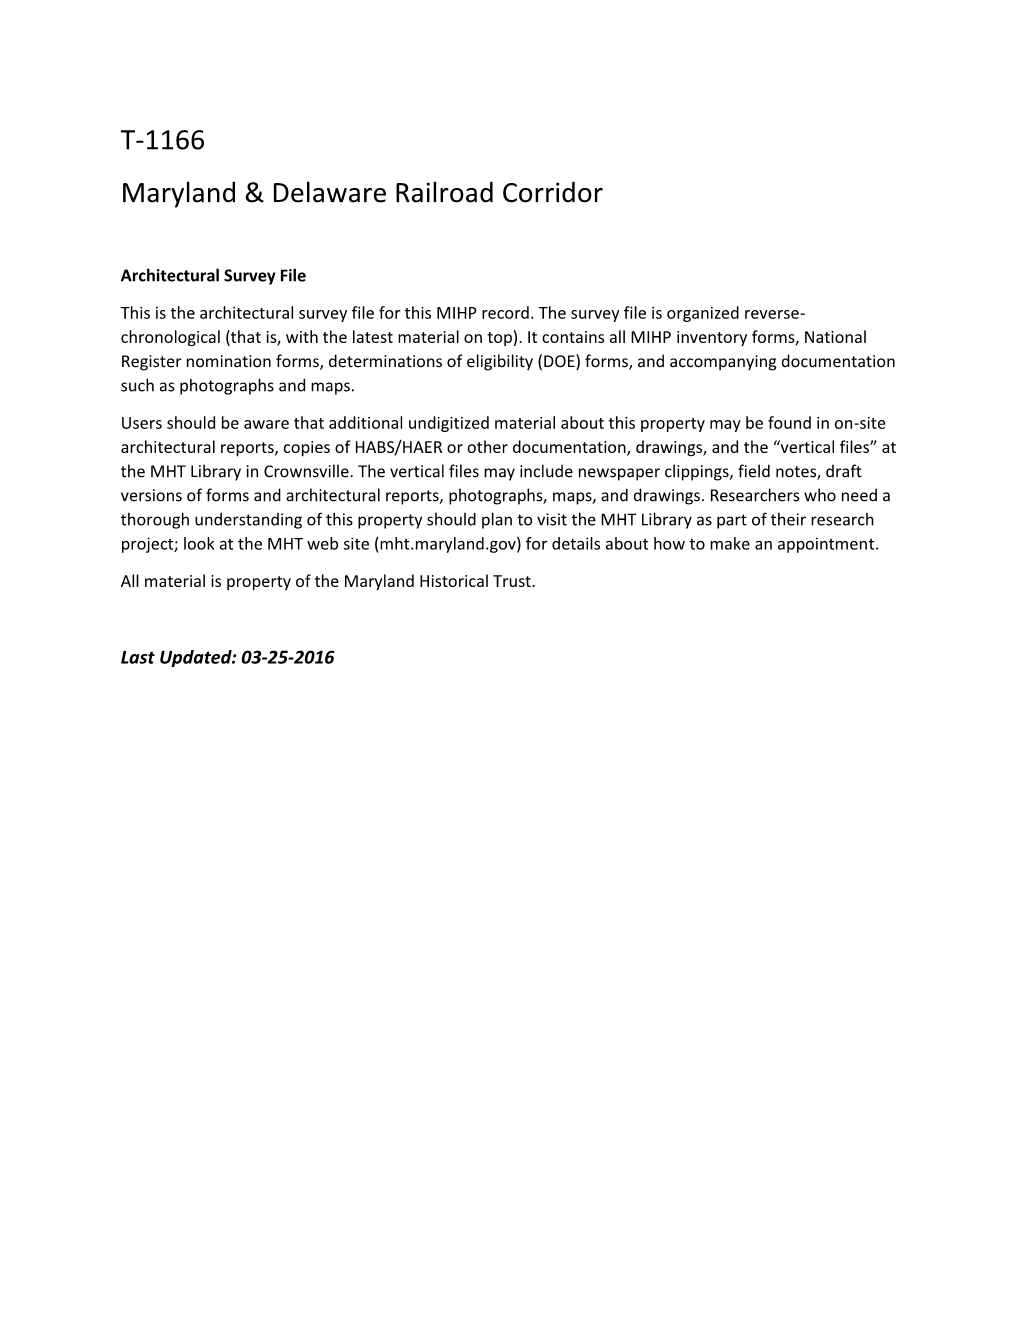 T-1166 Maryland & Delaware Railroad Corridor